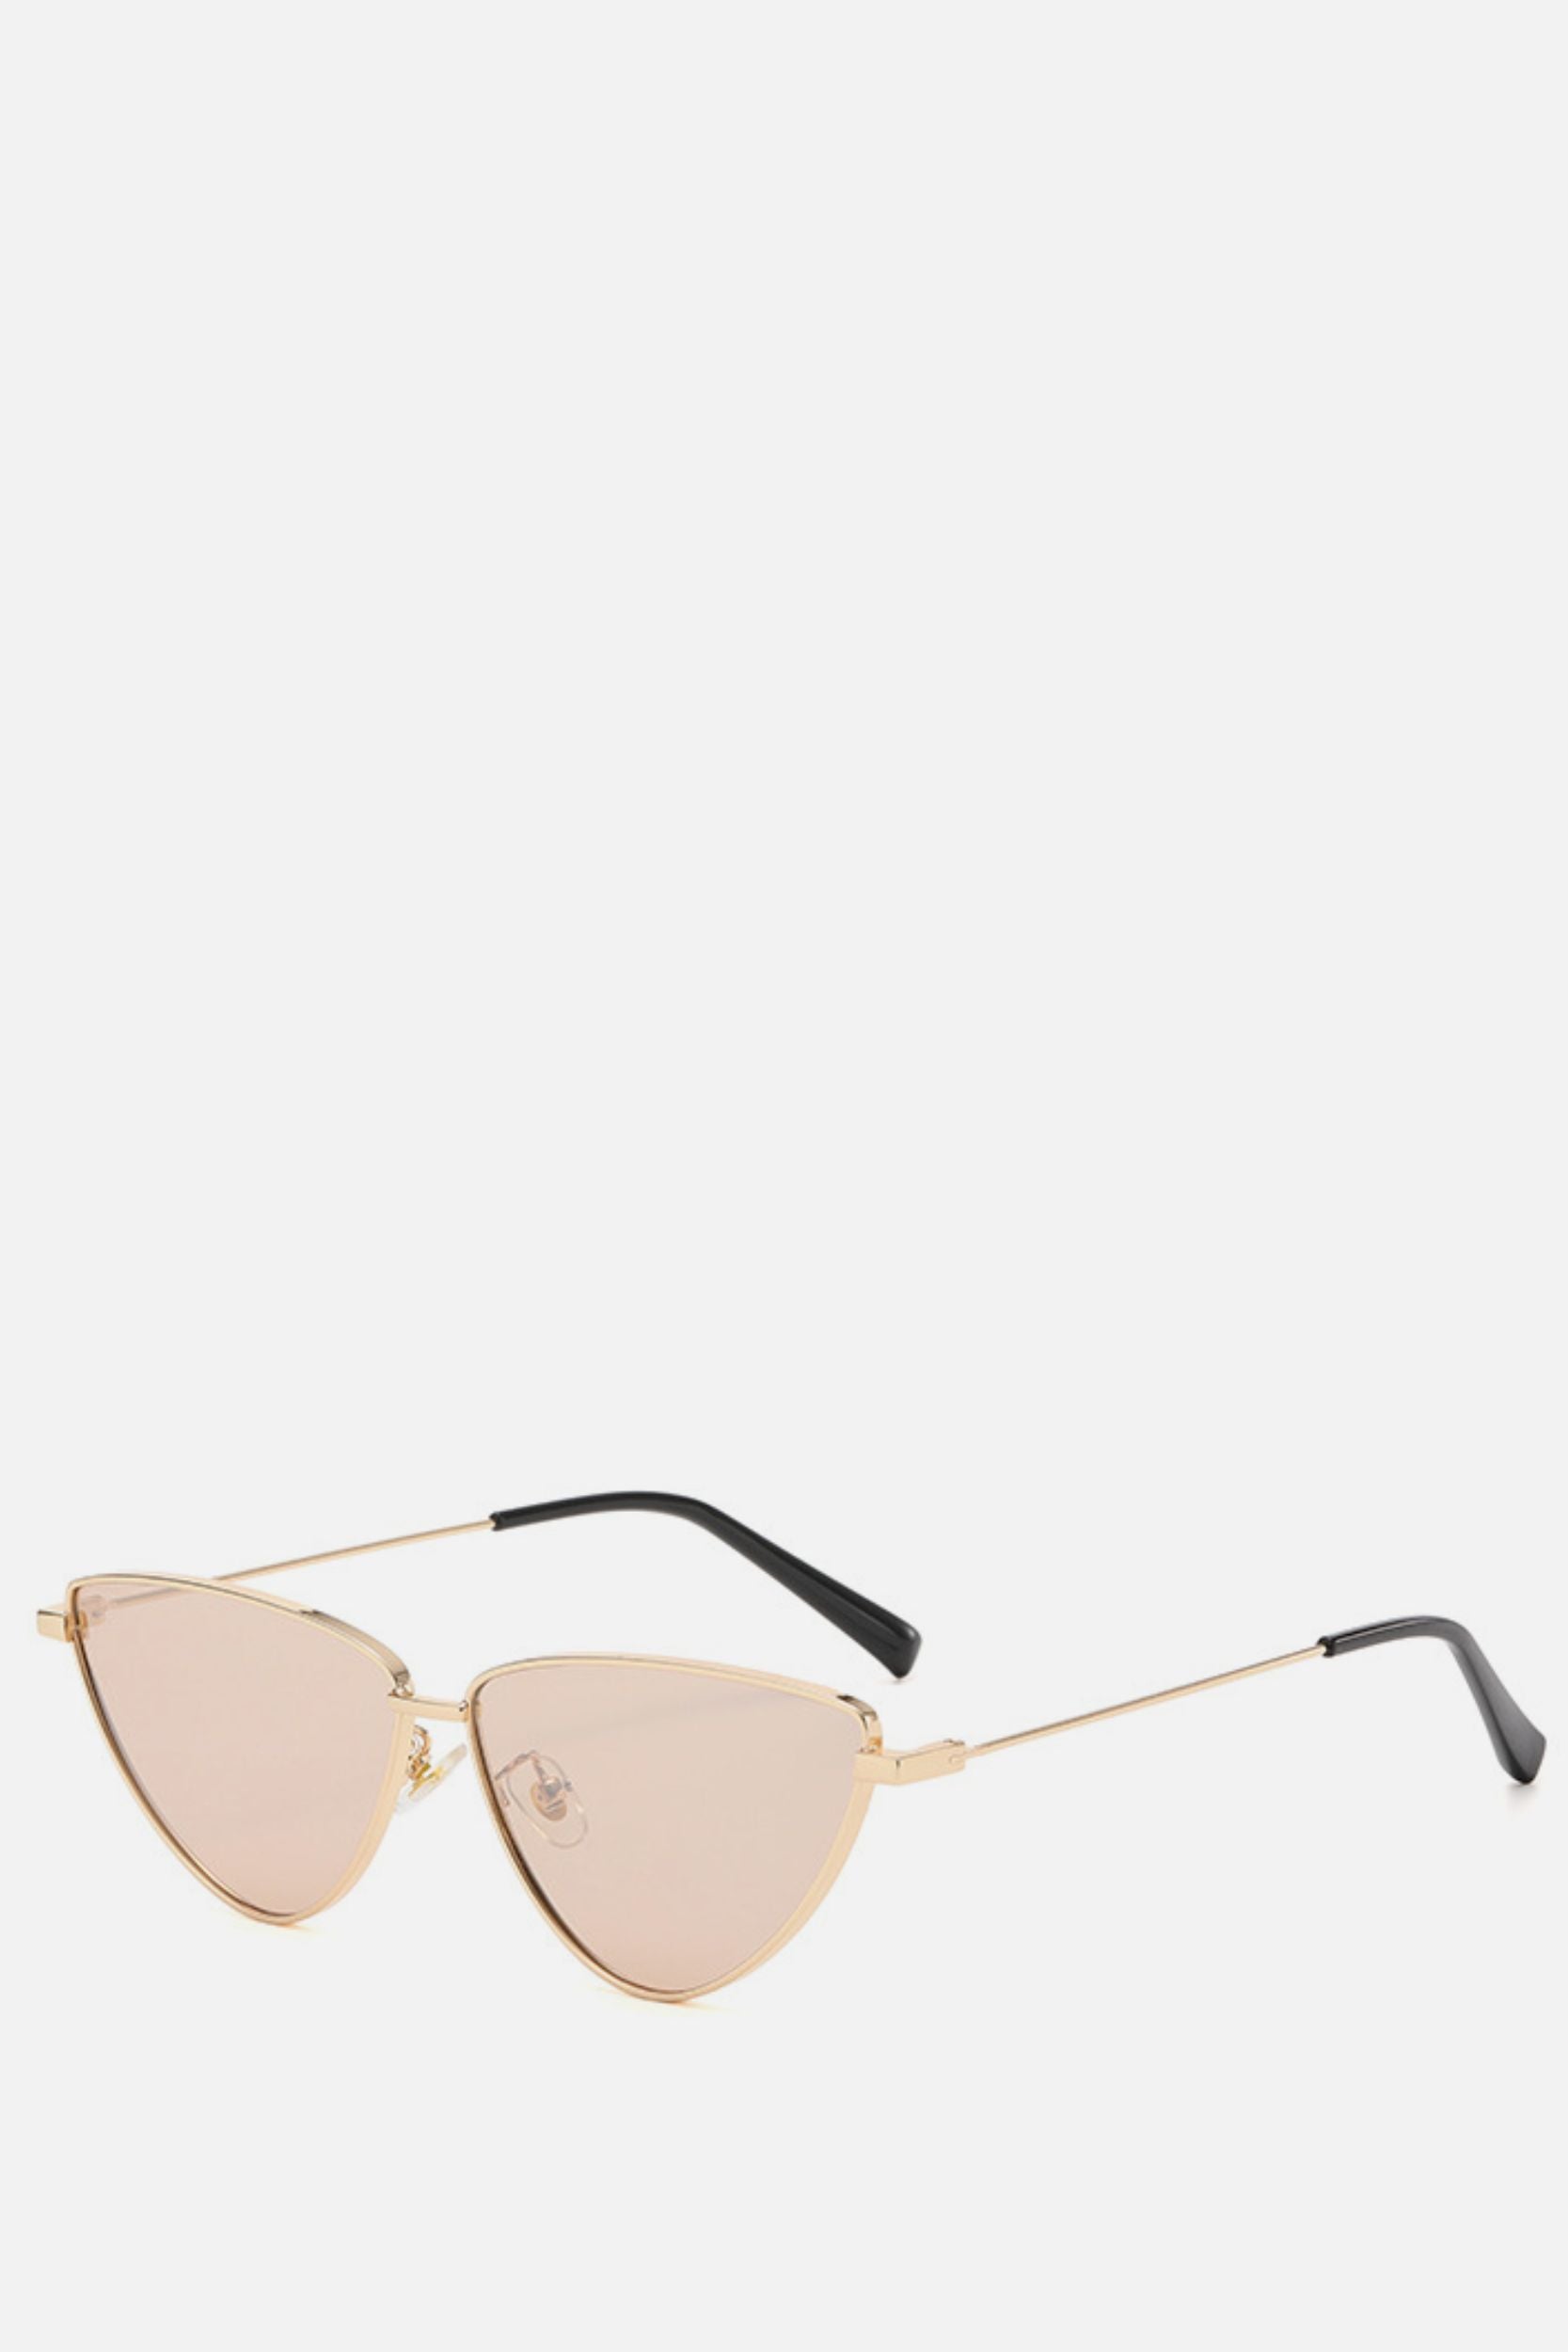 MONTUIRI Gold Tint Cat Eye Sunglasses